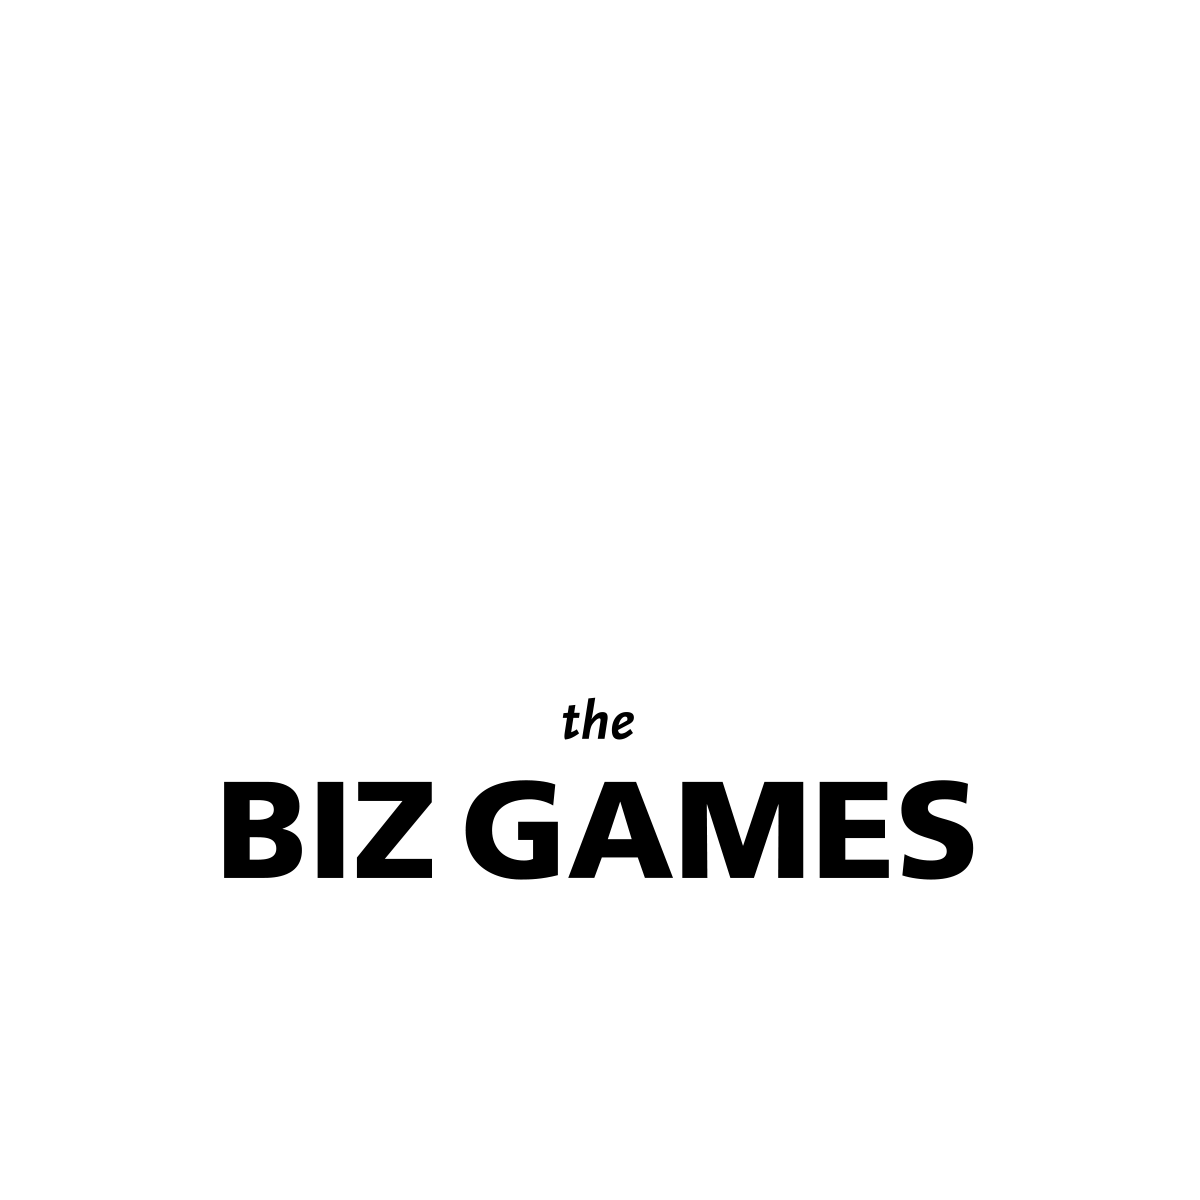 The Biz Games